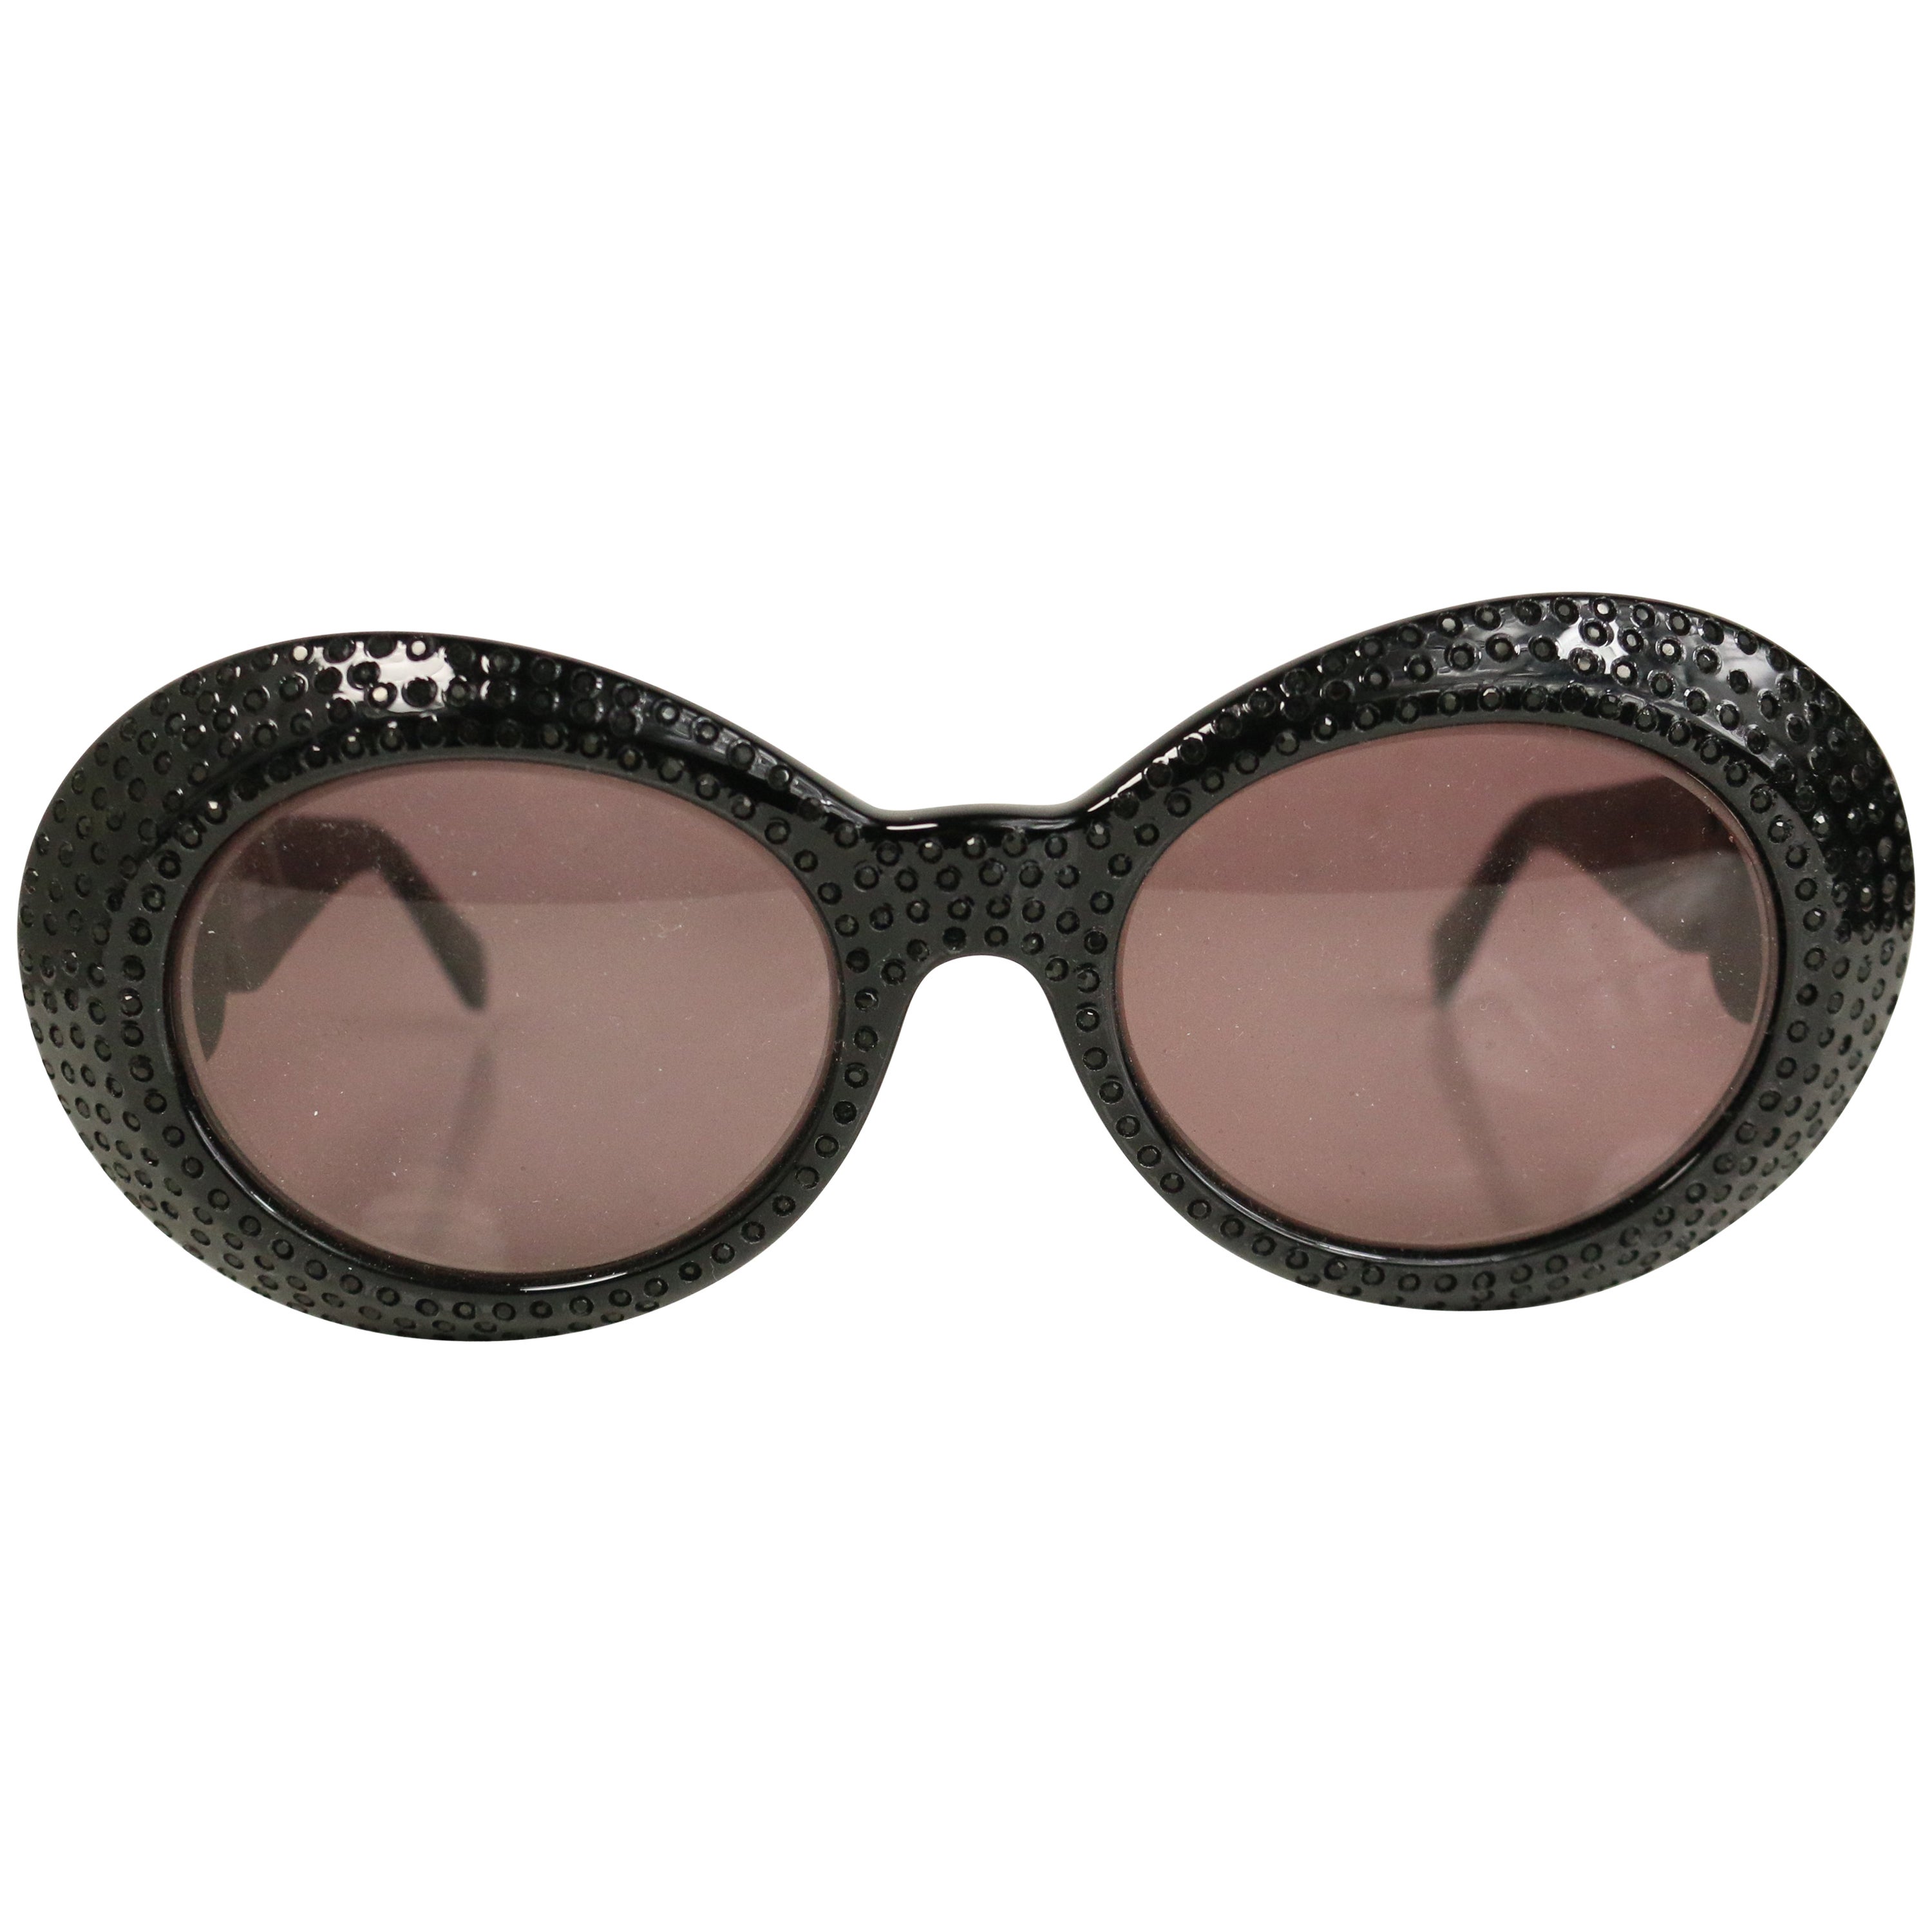 Gianni Versace sunglasses MOD 420 COL 852 at 1stdibs